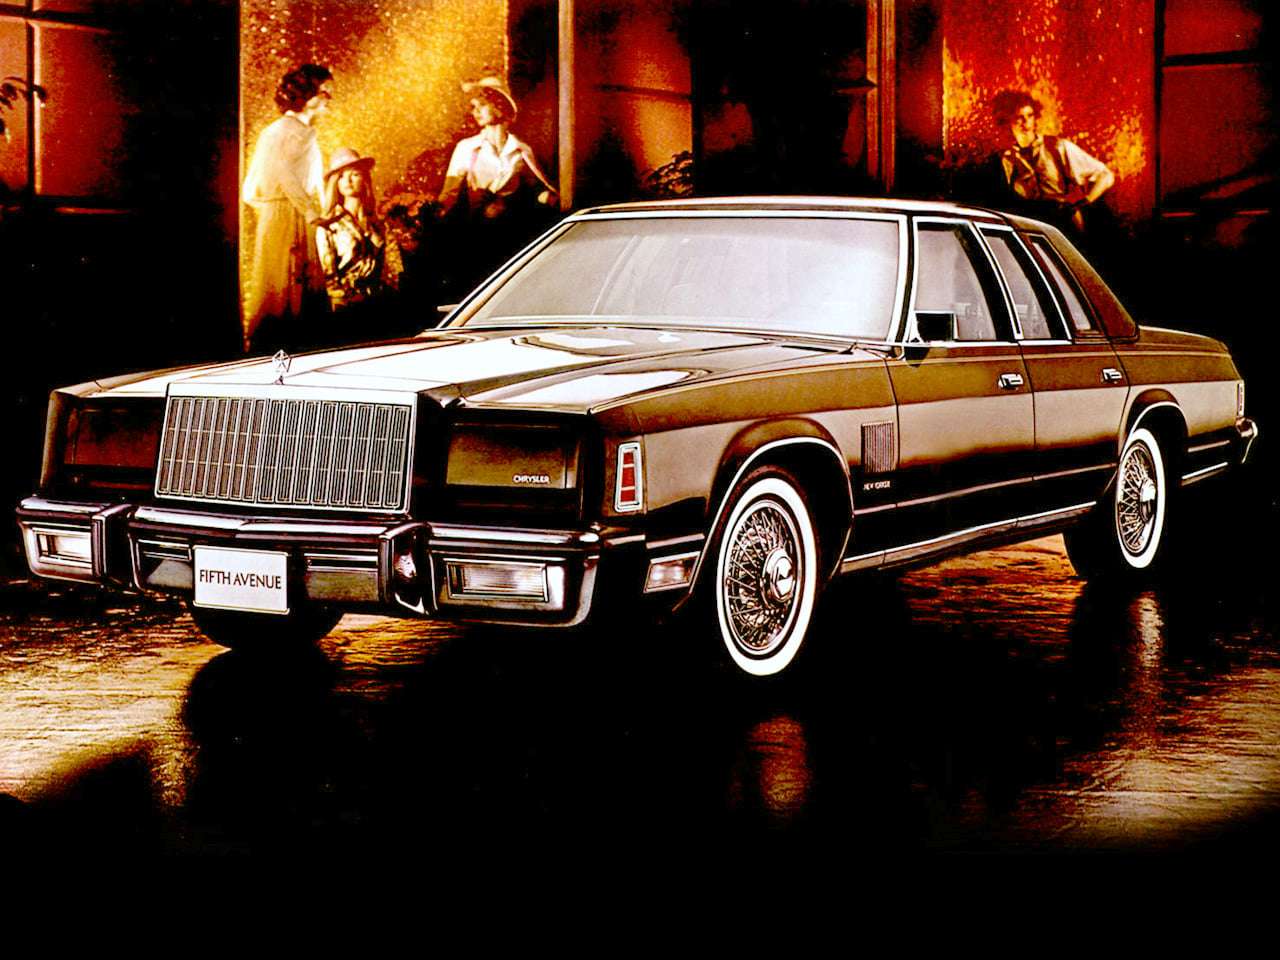 1980 Chrysler New Yorker Fifth Avenue пазл онлайн